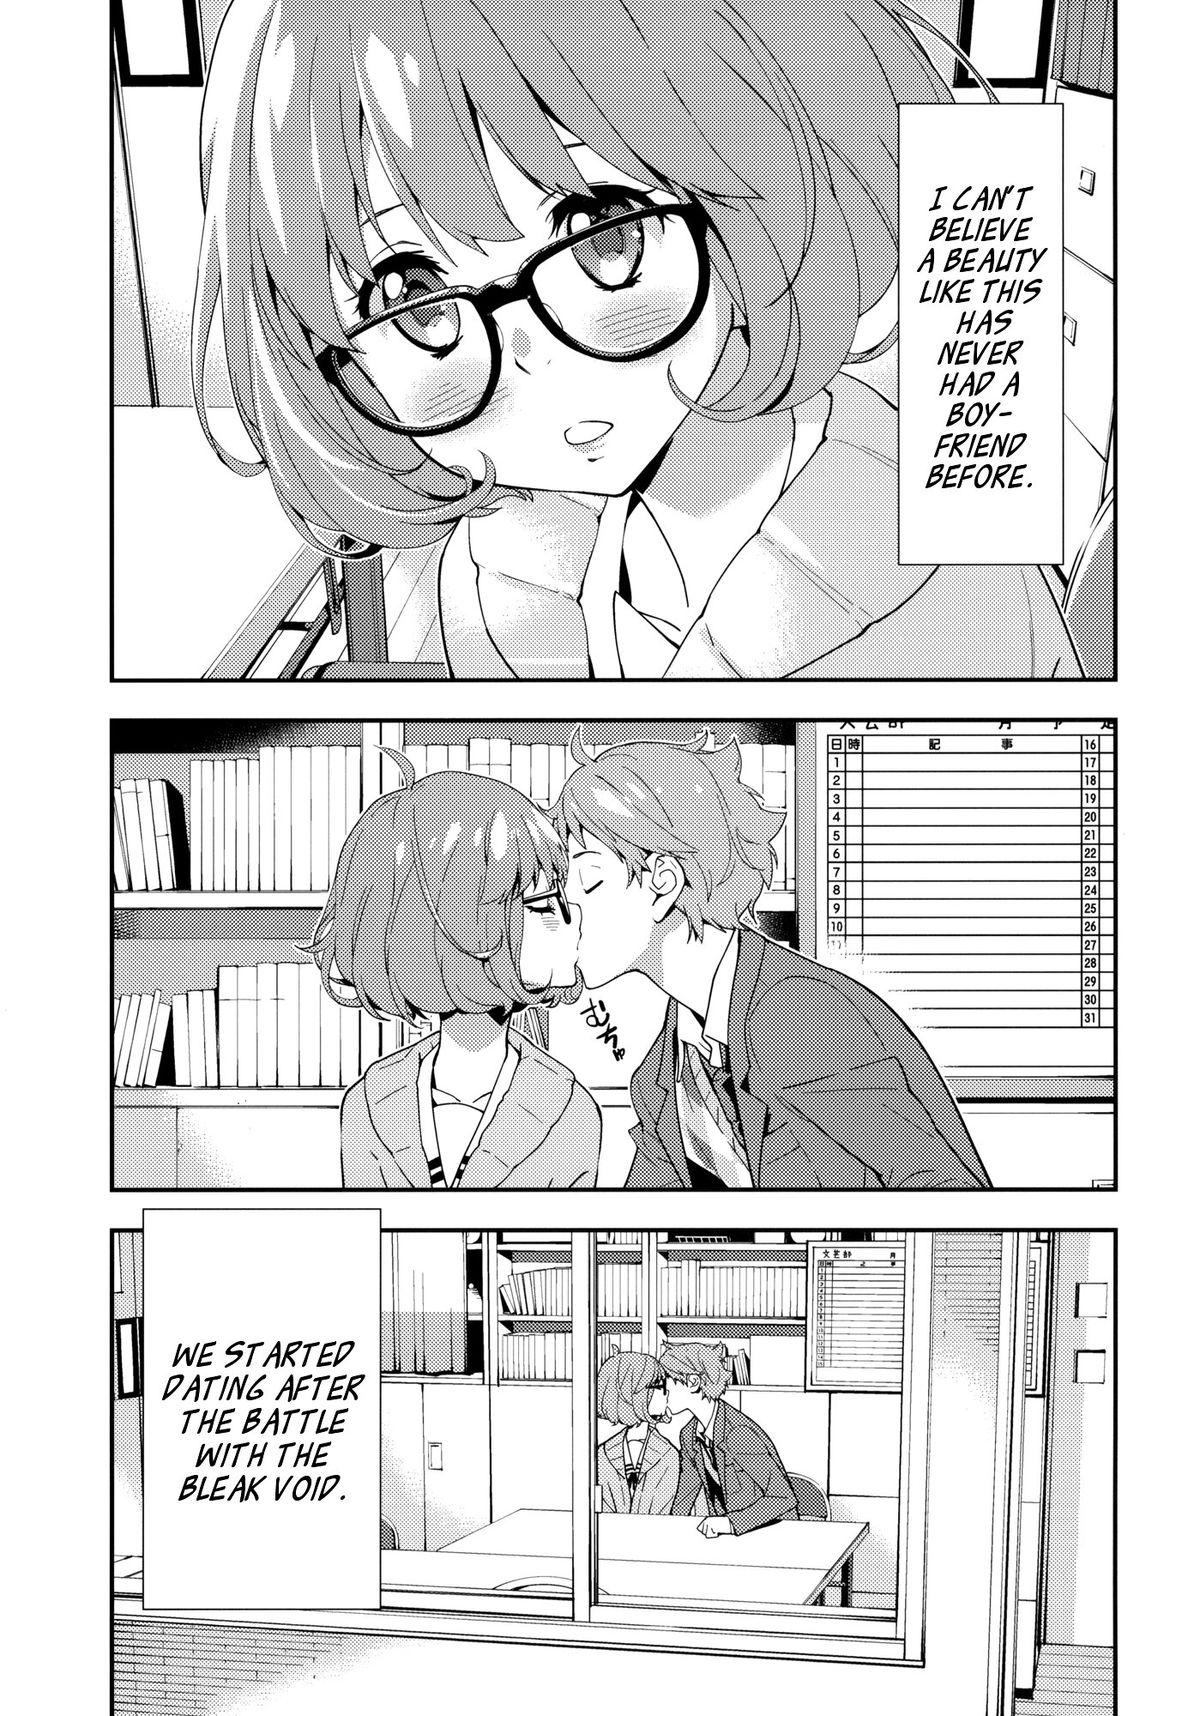 Innocent EXCLUDE - Kyoukai no kanata Internal - Page 4